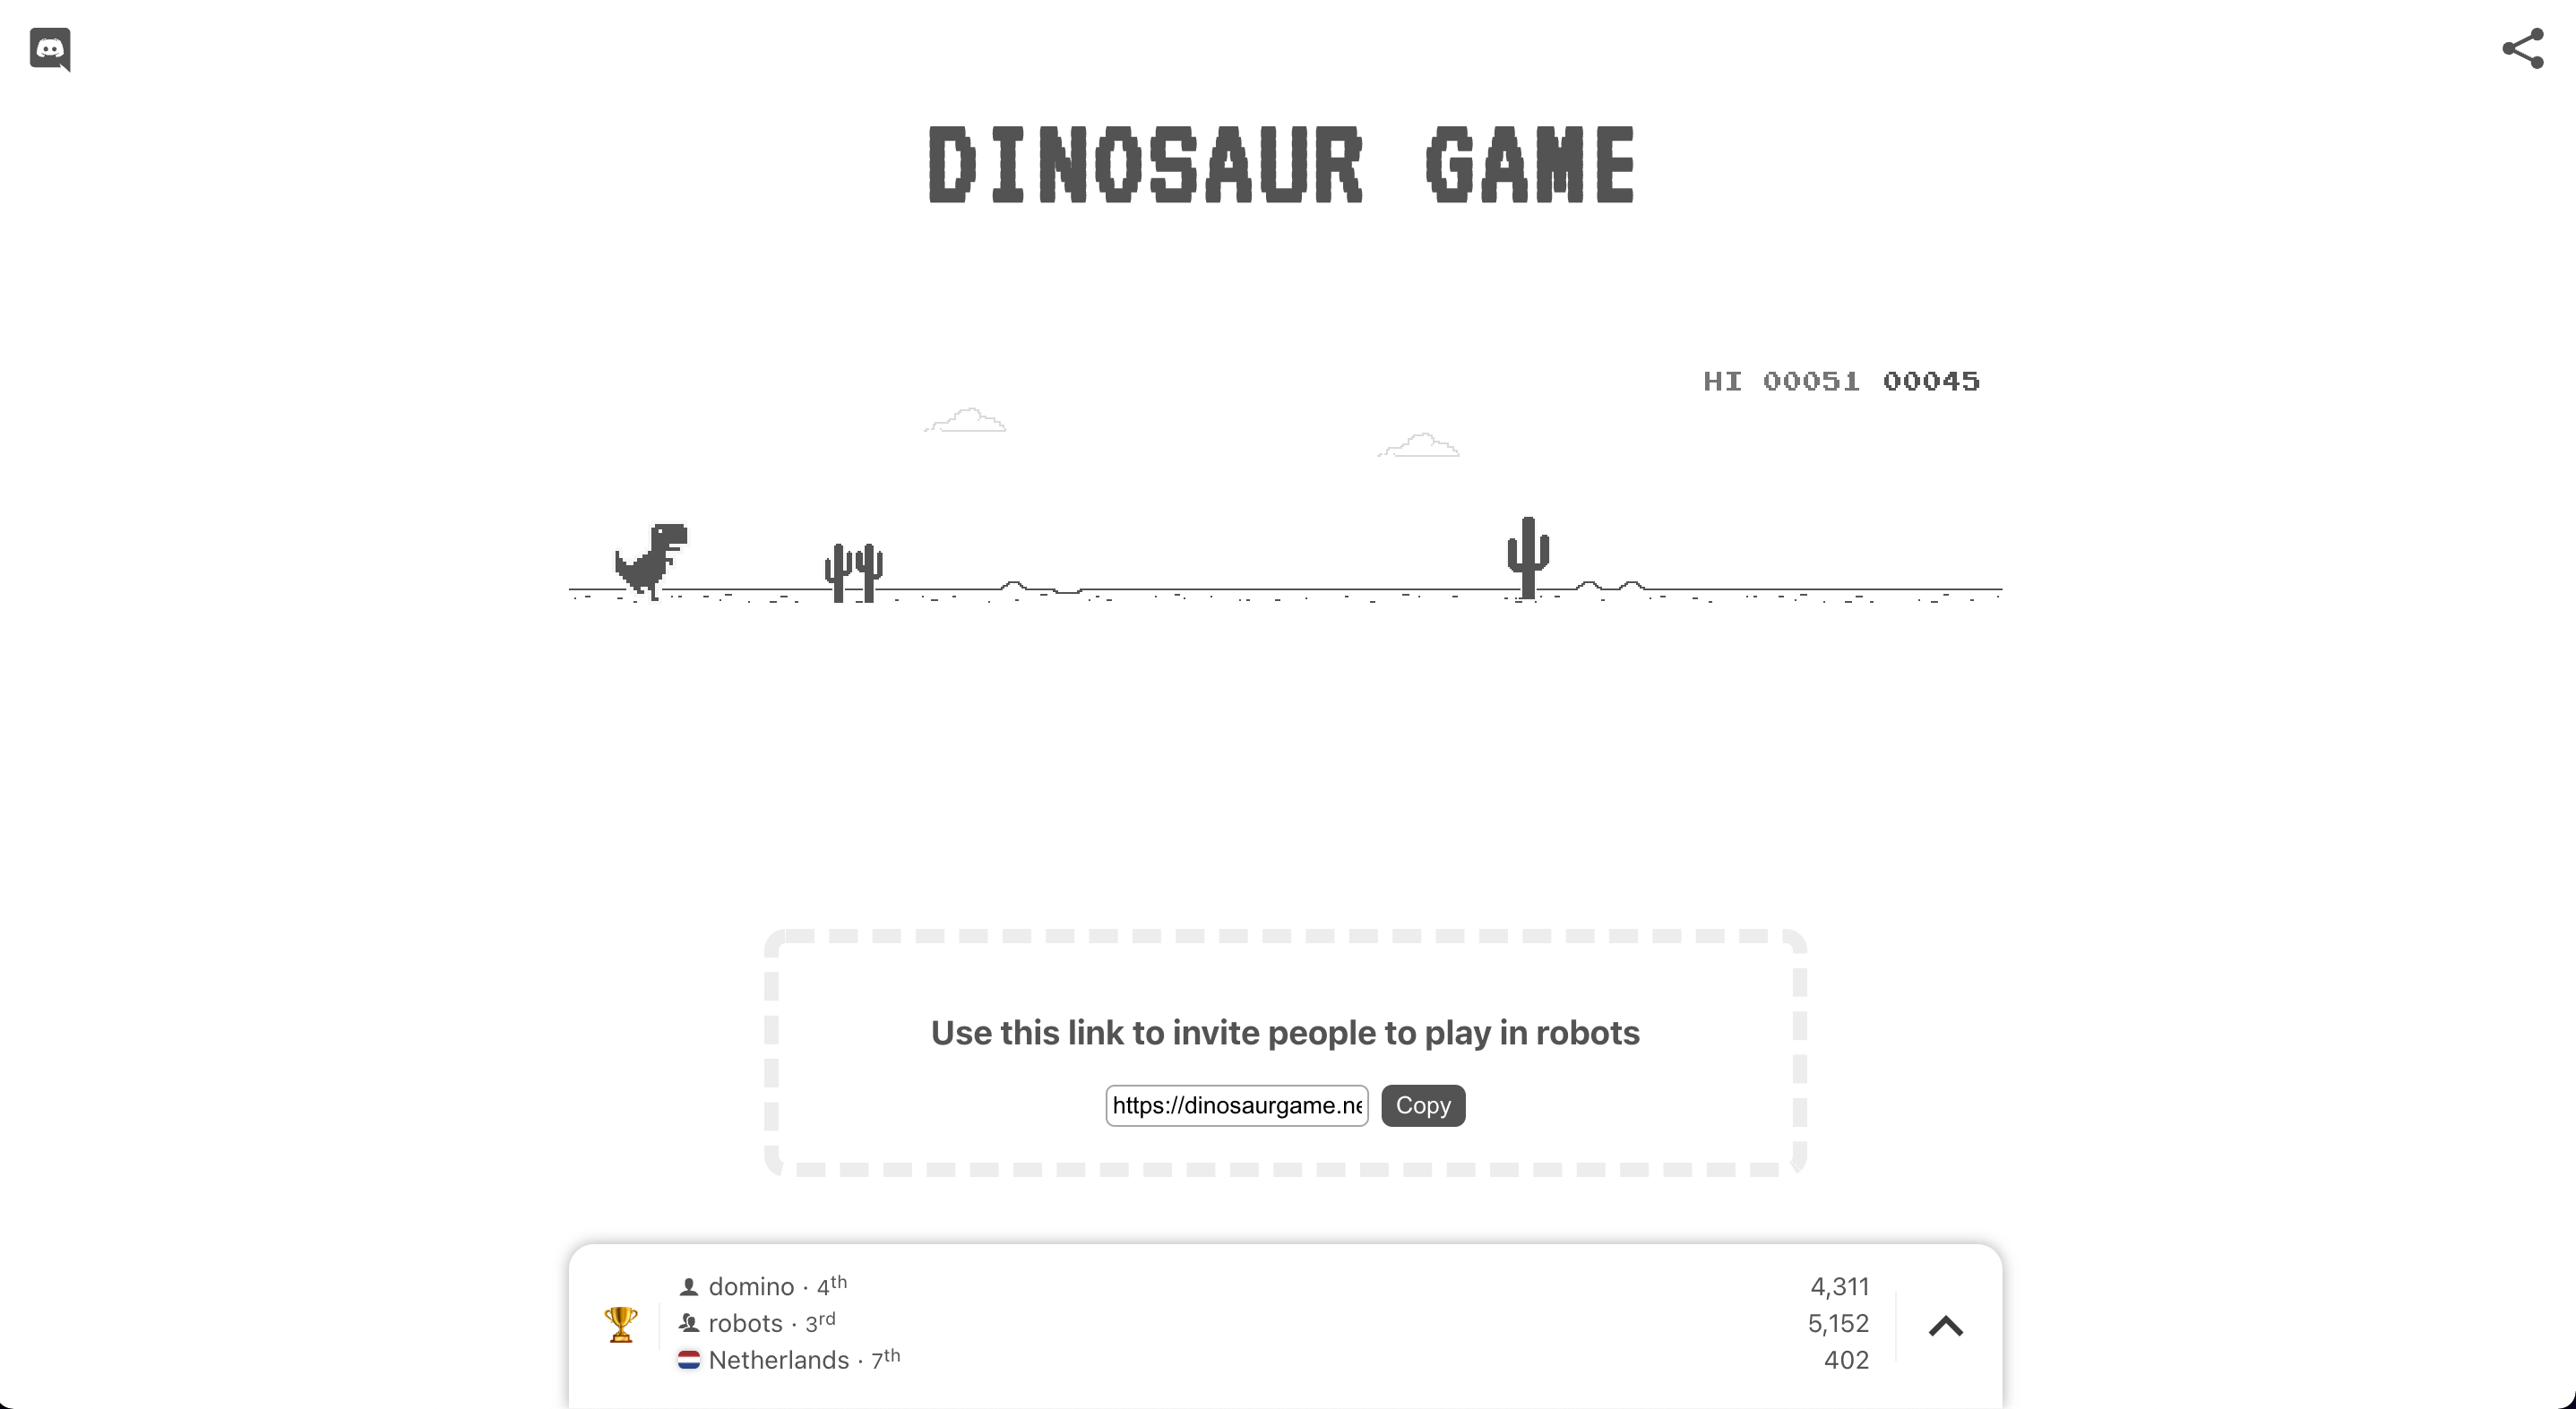 How to Play the No Internet Google Chrome Dinosaur Game - Both